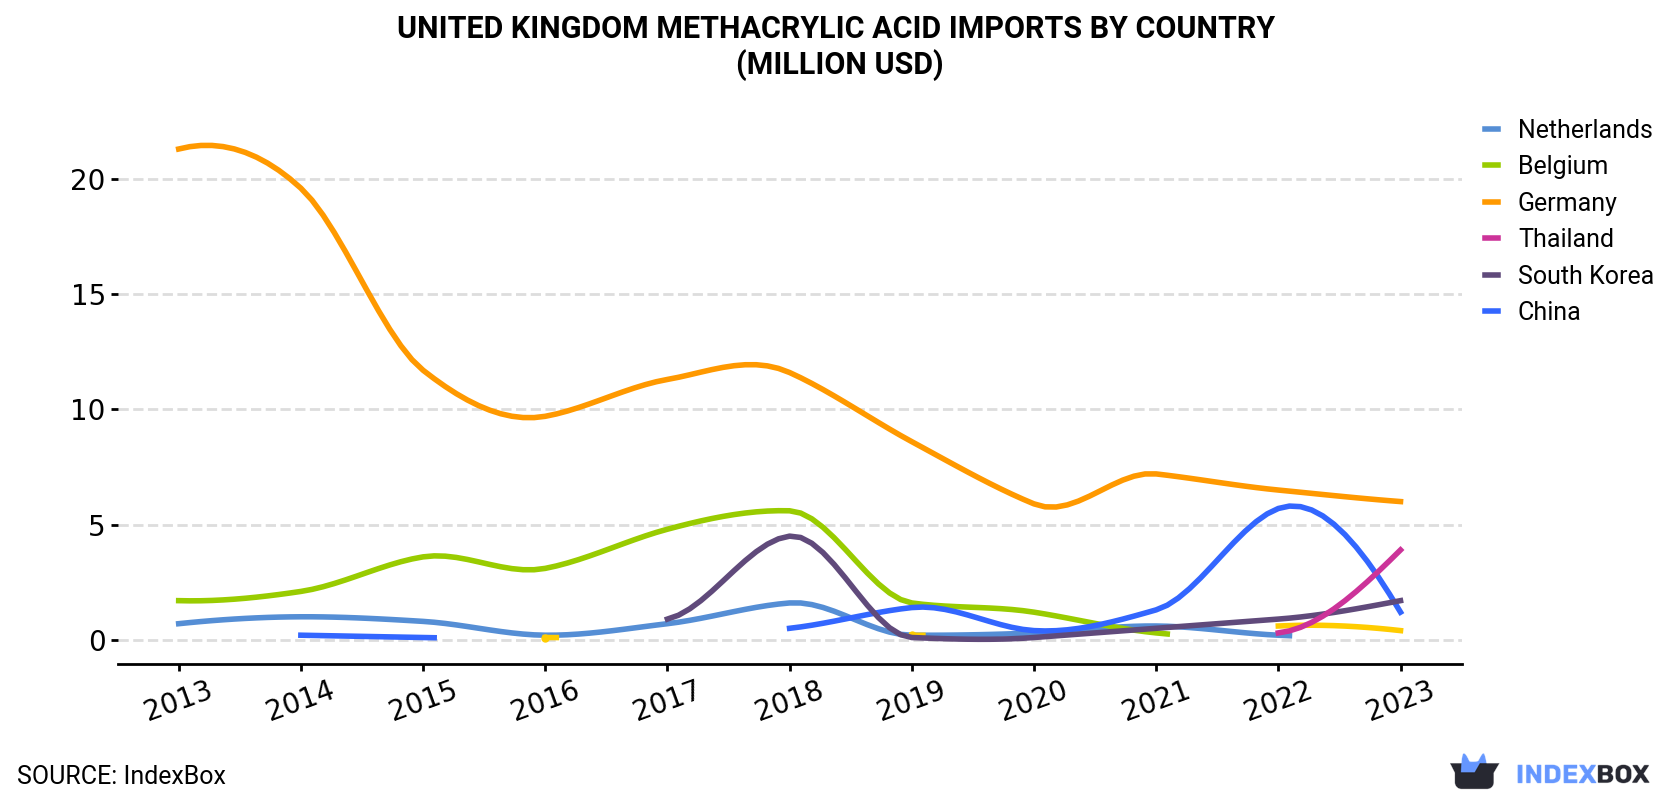 United Kingdom Methacrylic Acid Imports By Country (Million USD)